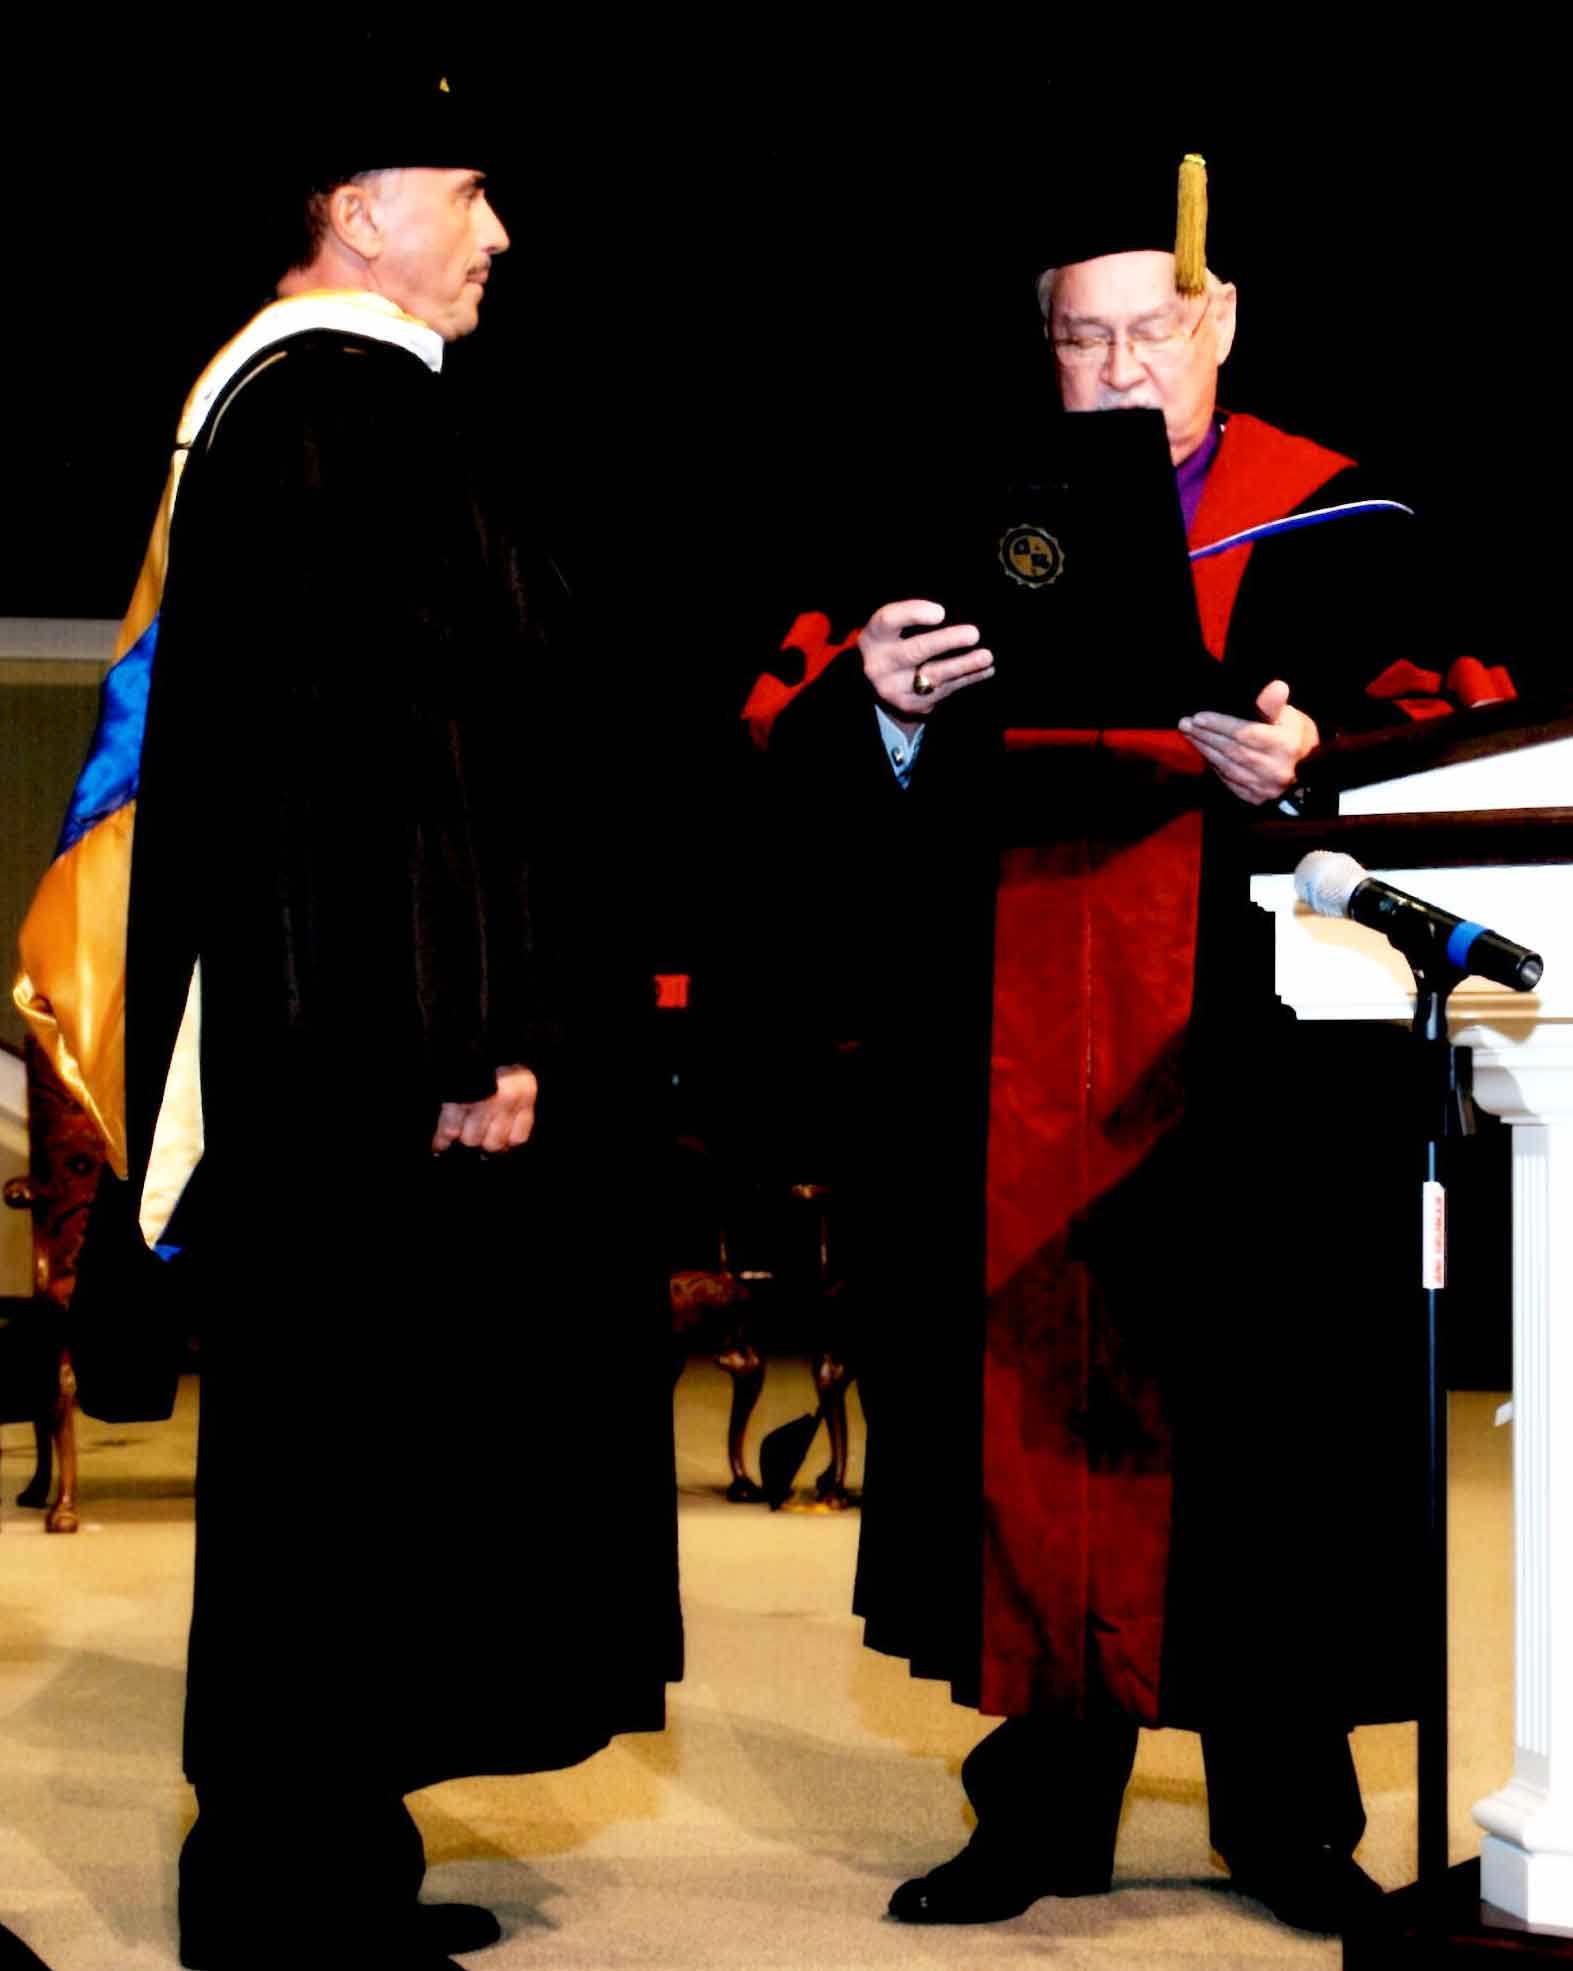 Ehrendoktowürde Dr. Leonard Coldwell der Luisianna Baptist University © 2002-2018 Dr. Leonard Coldwell 